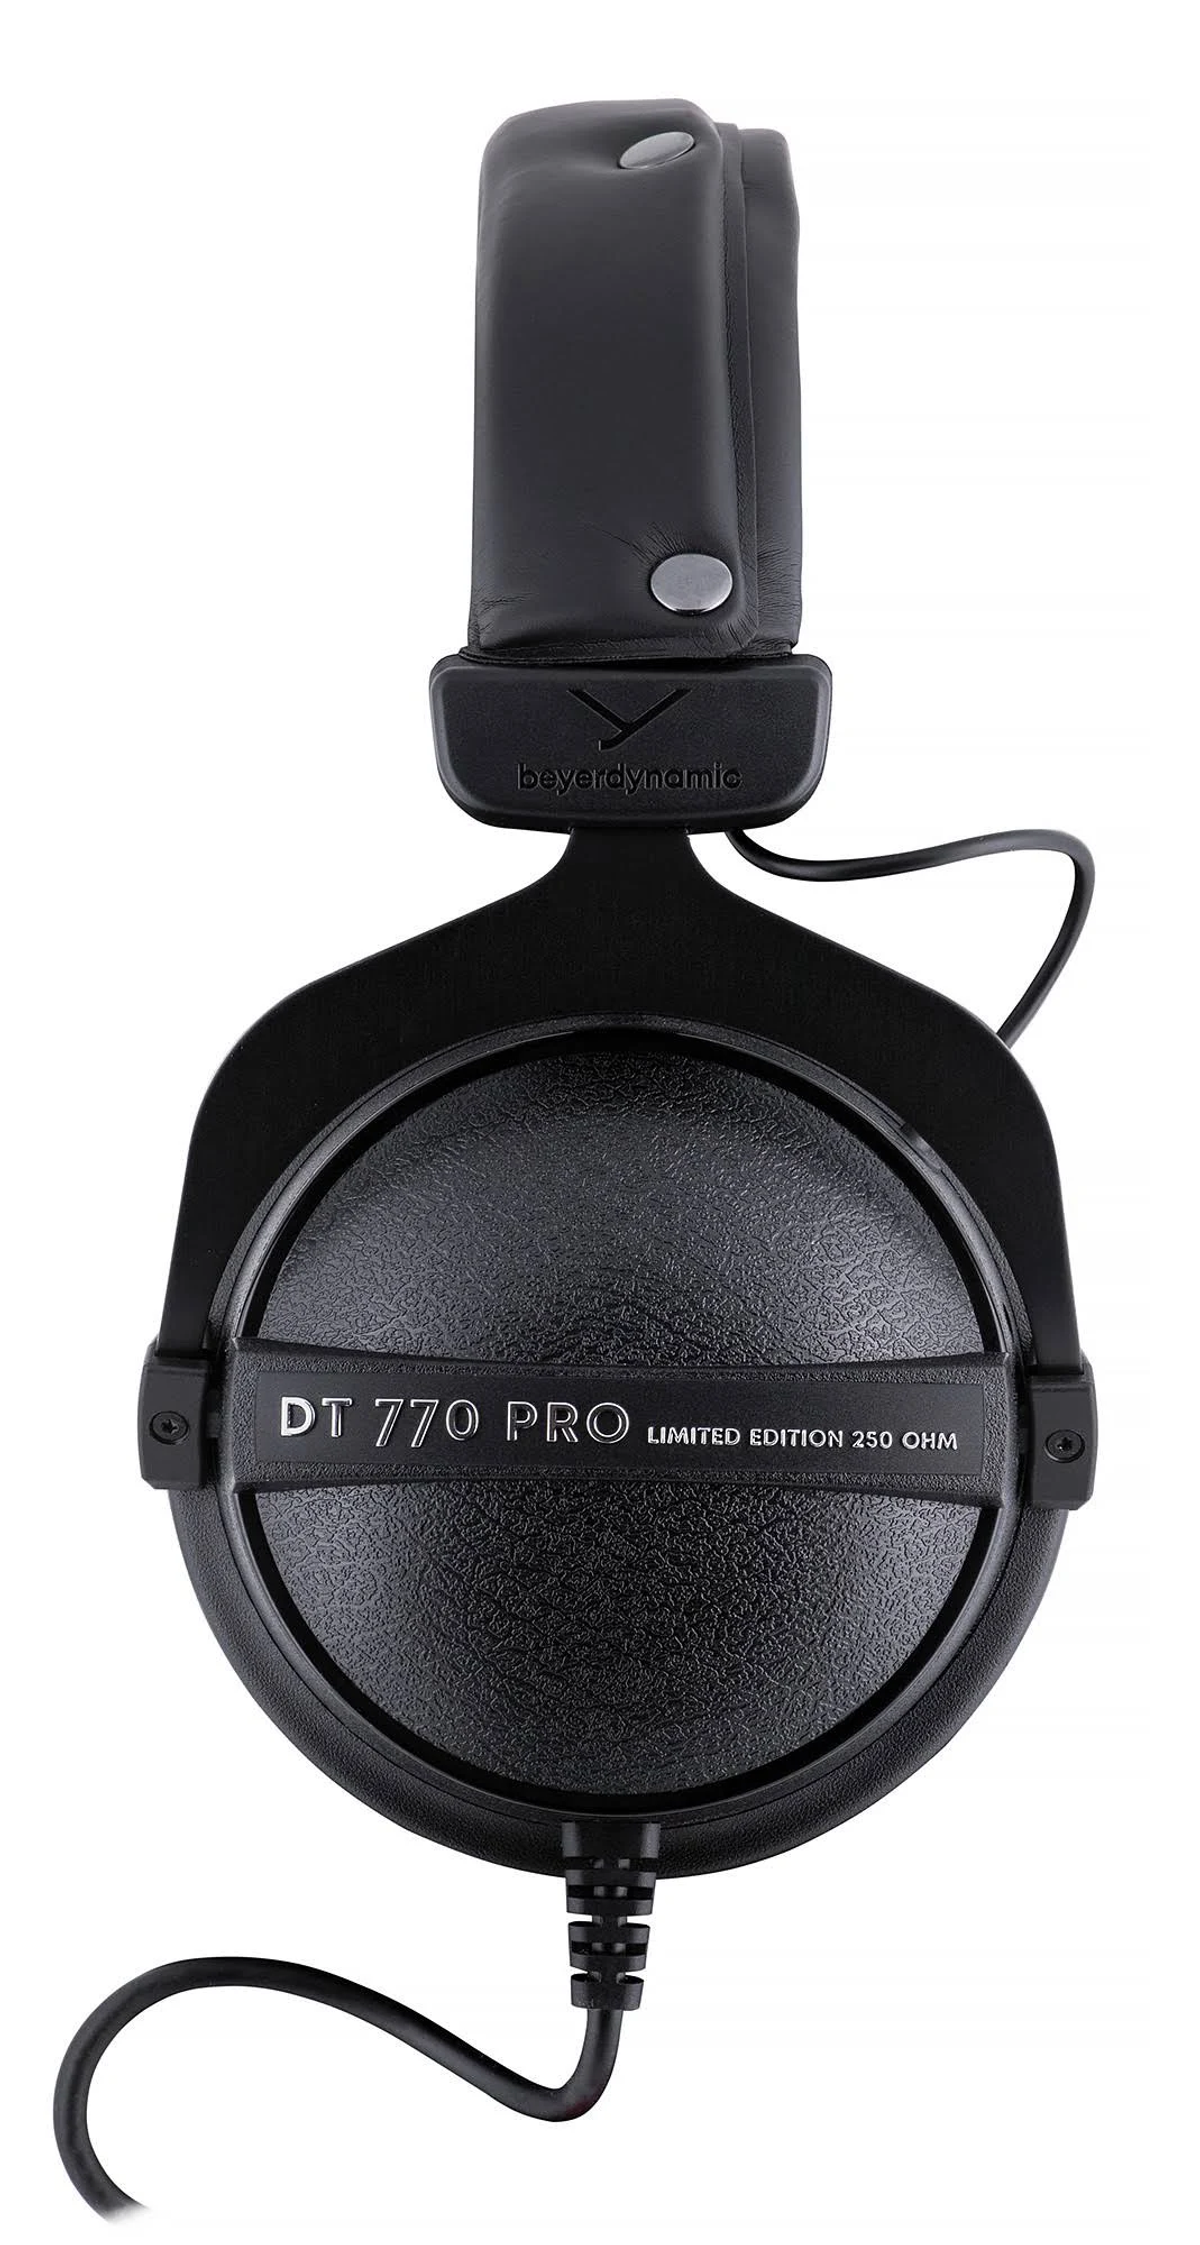 Ohm Pro 250 770 BEYERDYNAMIC Black, DT Kopfhörer Over-ear - Schwarz